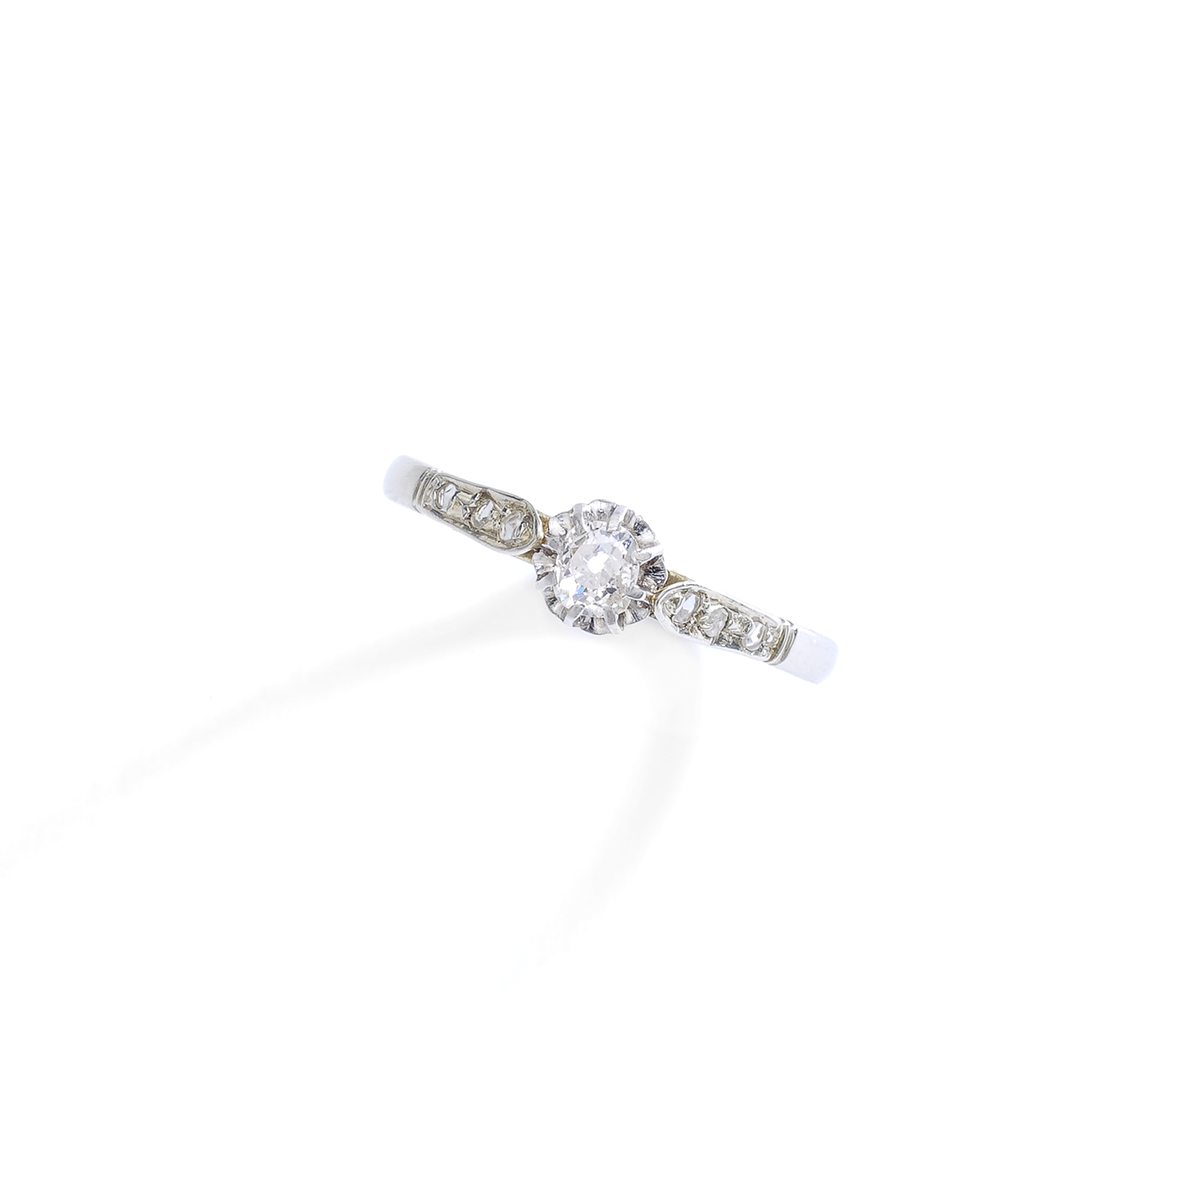 White diamond platinum engagement ring